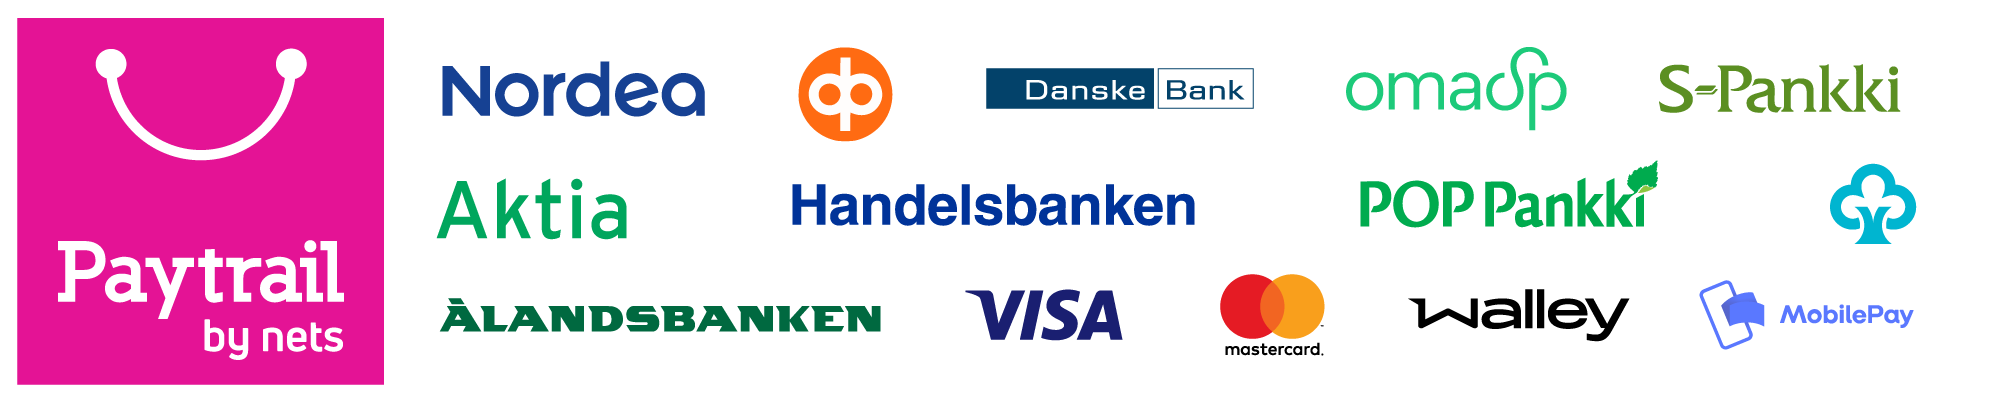 Paytrail-banneri-pankit-visa-mastercard-mobilepay-walley